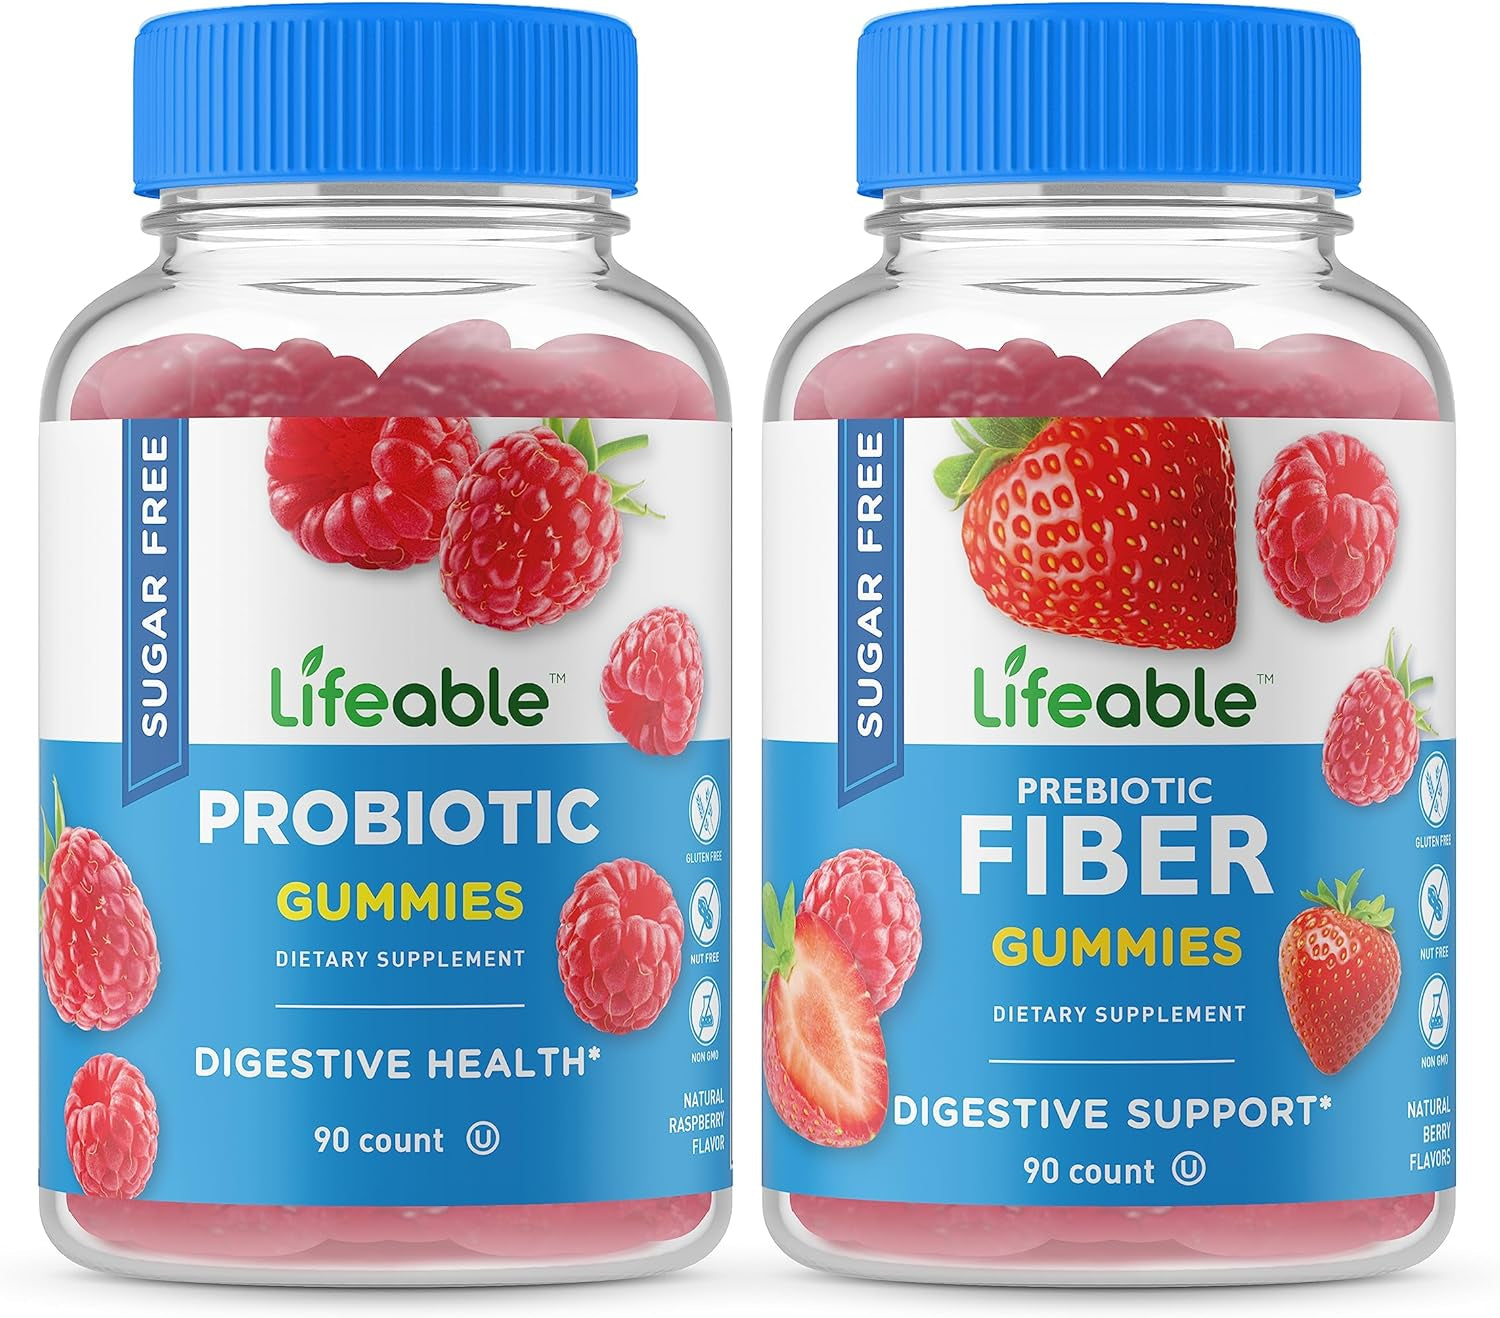 Lifeable Sugar Free Probiotic + Prebiotic Fiber, Gummies Bundle - Great Tasting, Vitamin Supplement, Gluten Free, GMO Free, Chewable Gummy